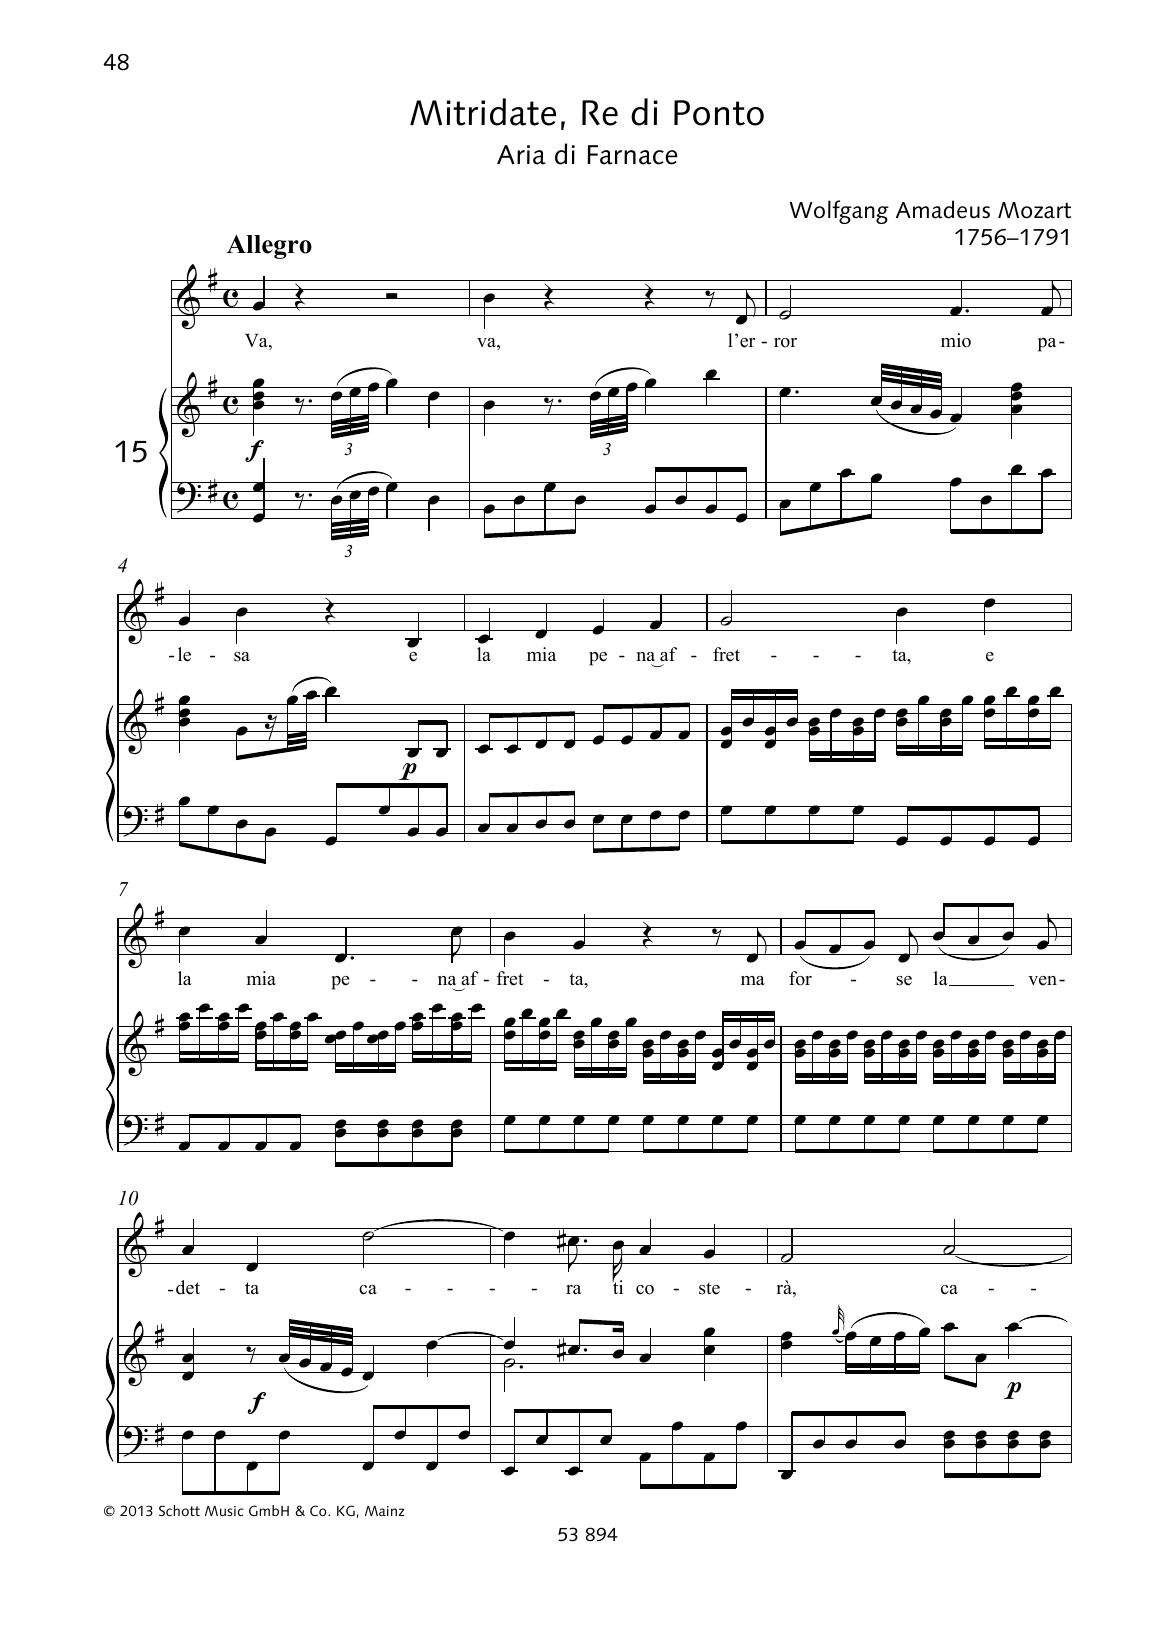 Download Wolfgang Amadeus Mozart Va, va, l'error mio palesa Sheet Music